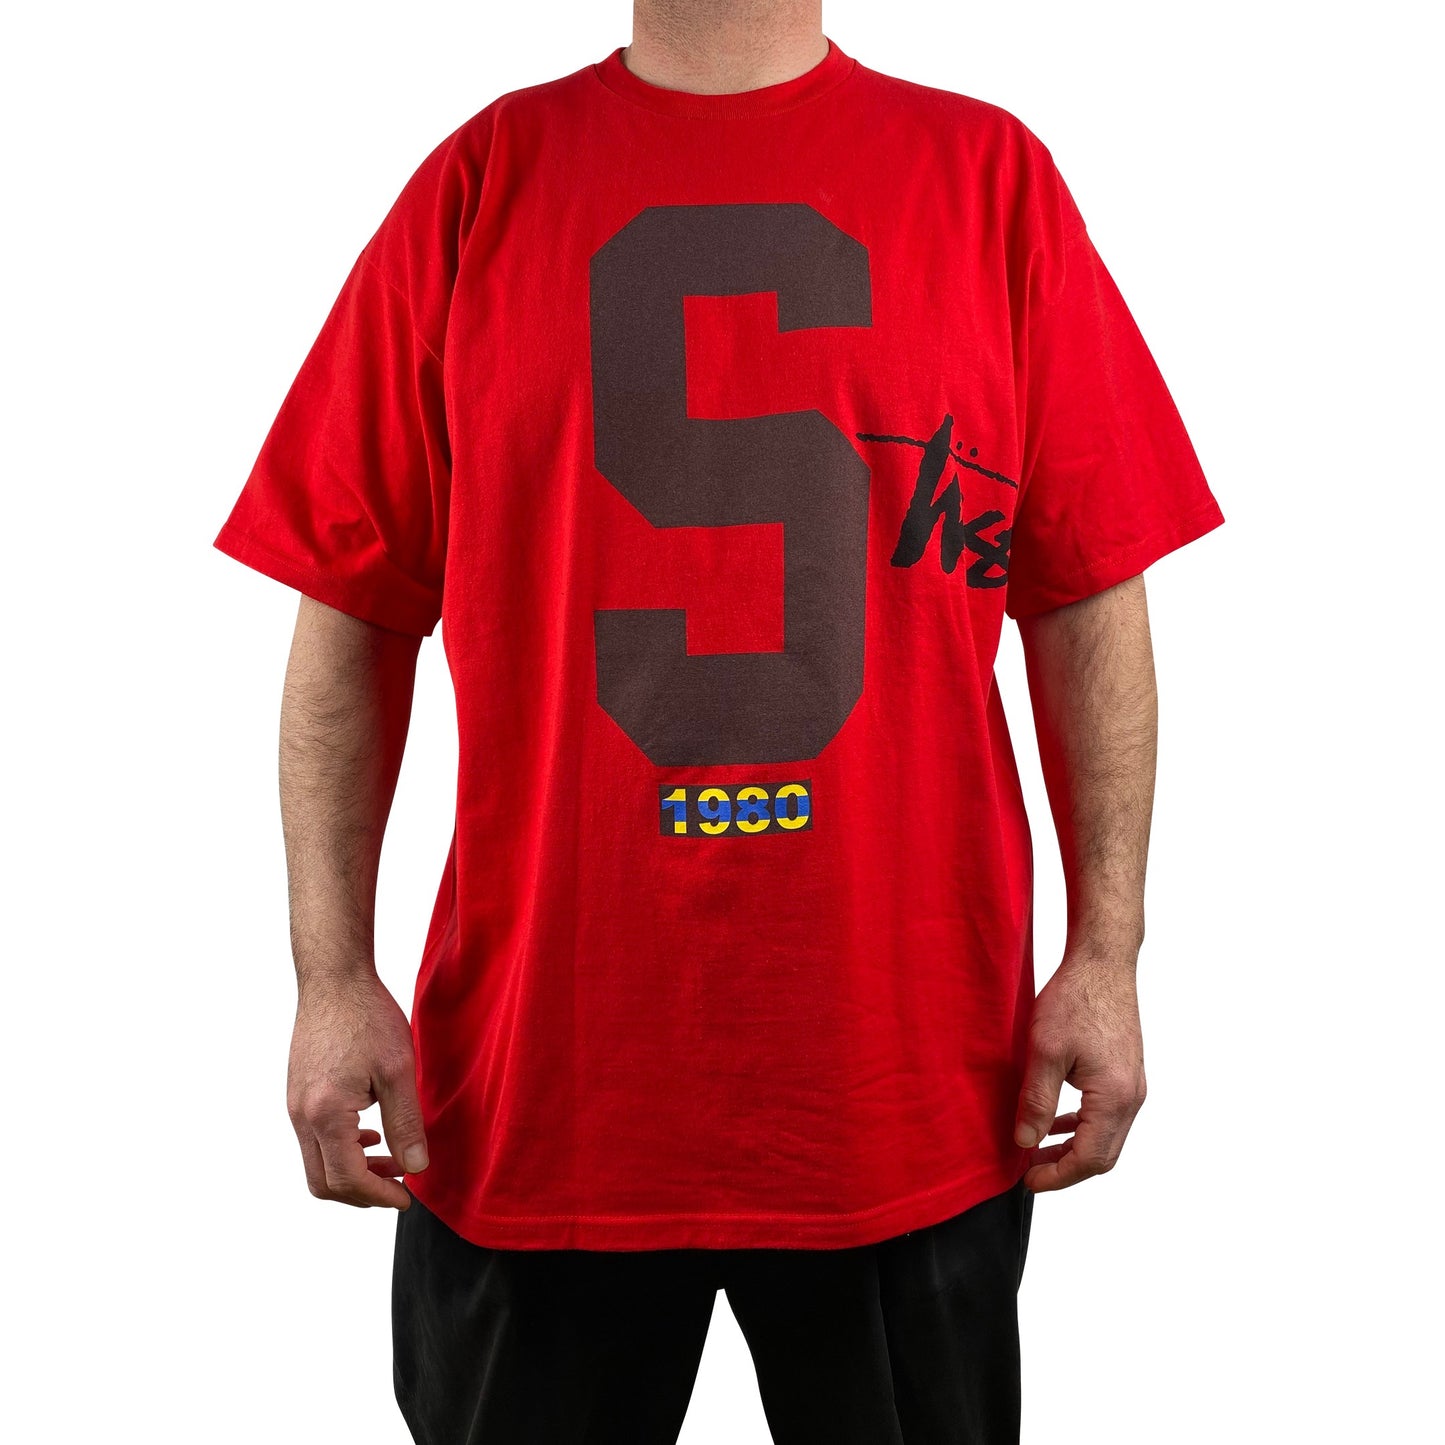 Stüssy T-Shirt “Big S 1980 Tee” -red